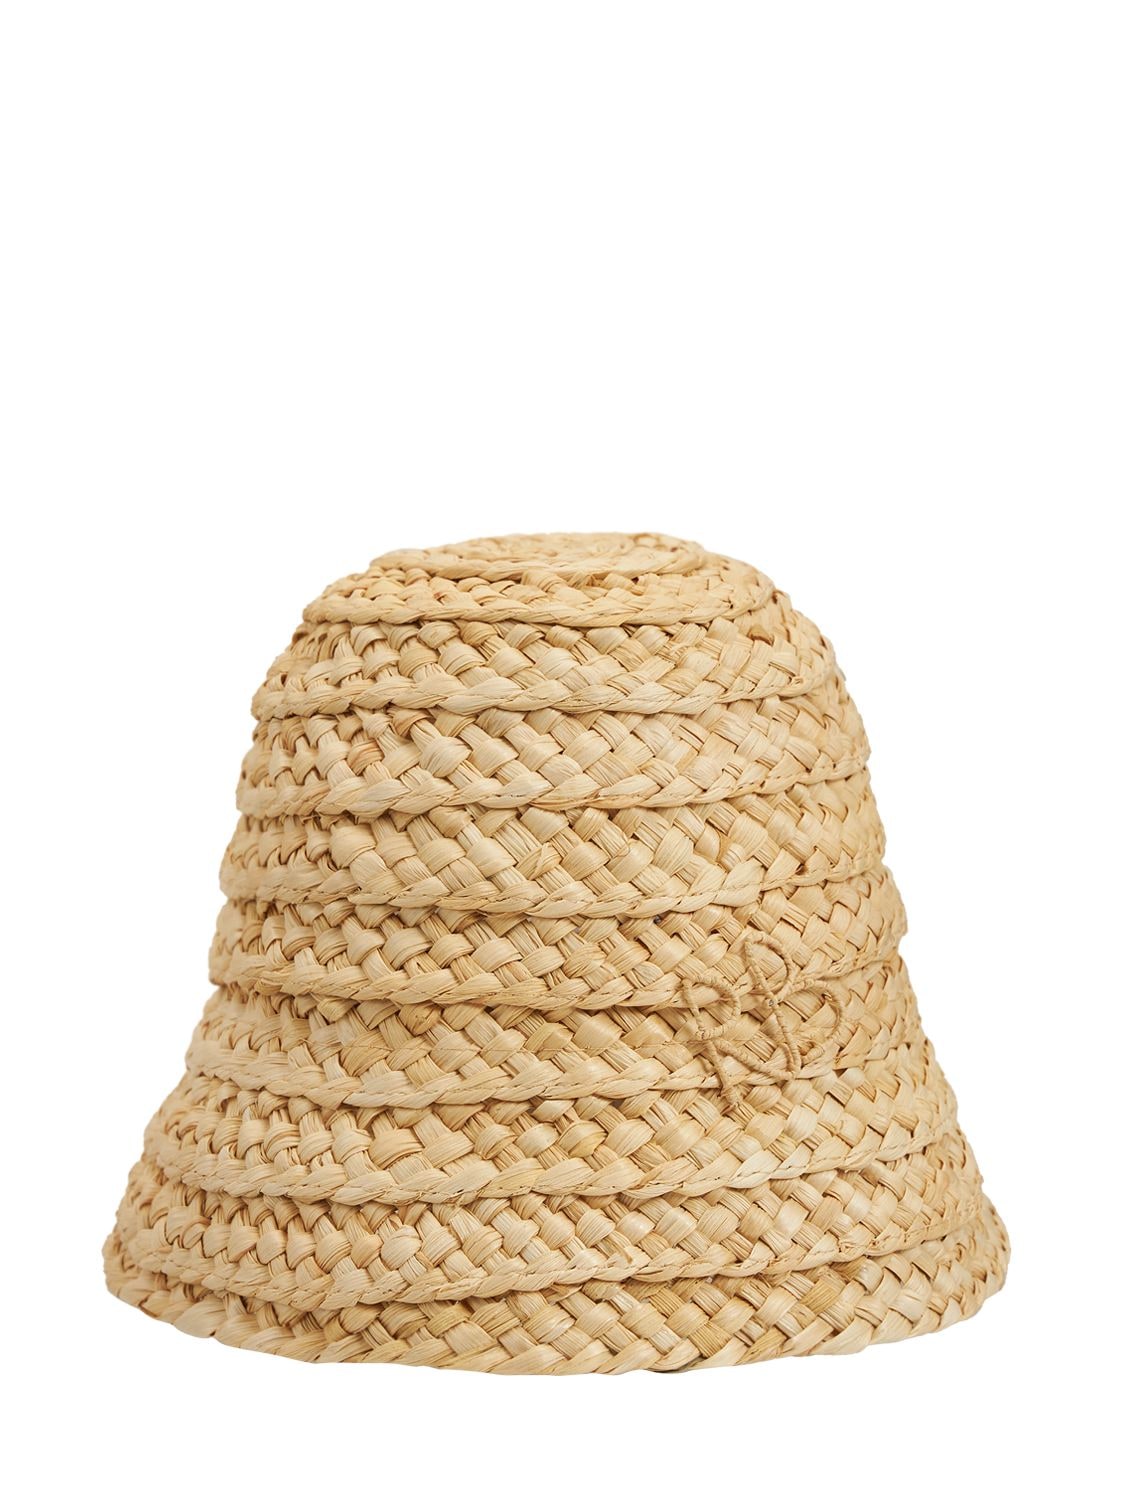 Image of Straw Cloche Hat